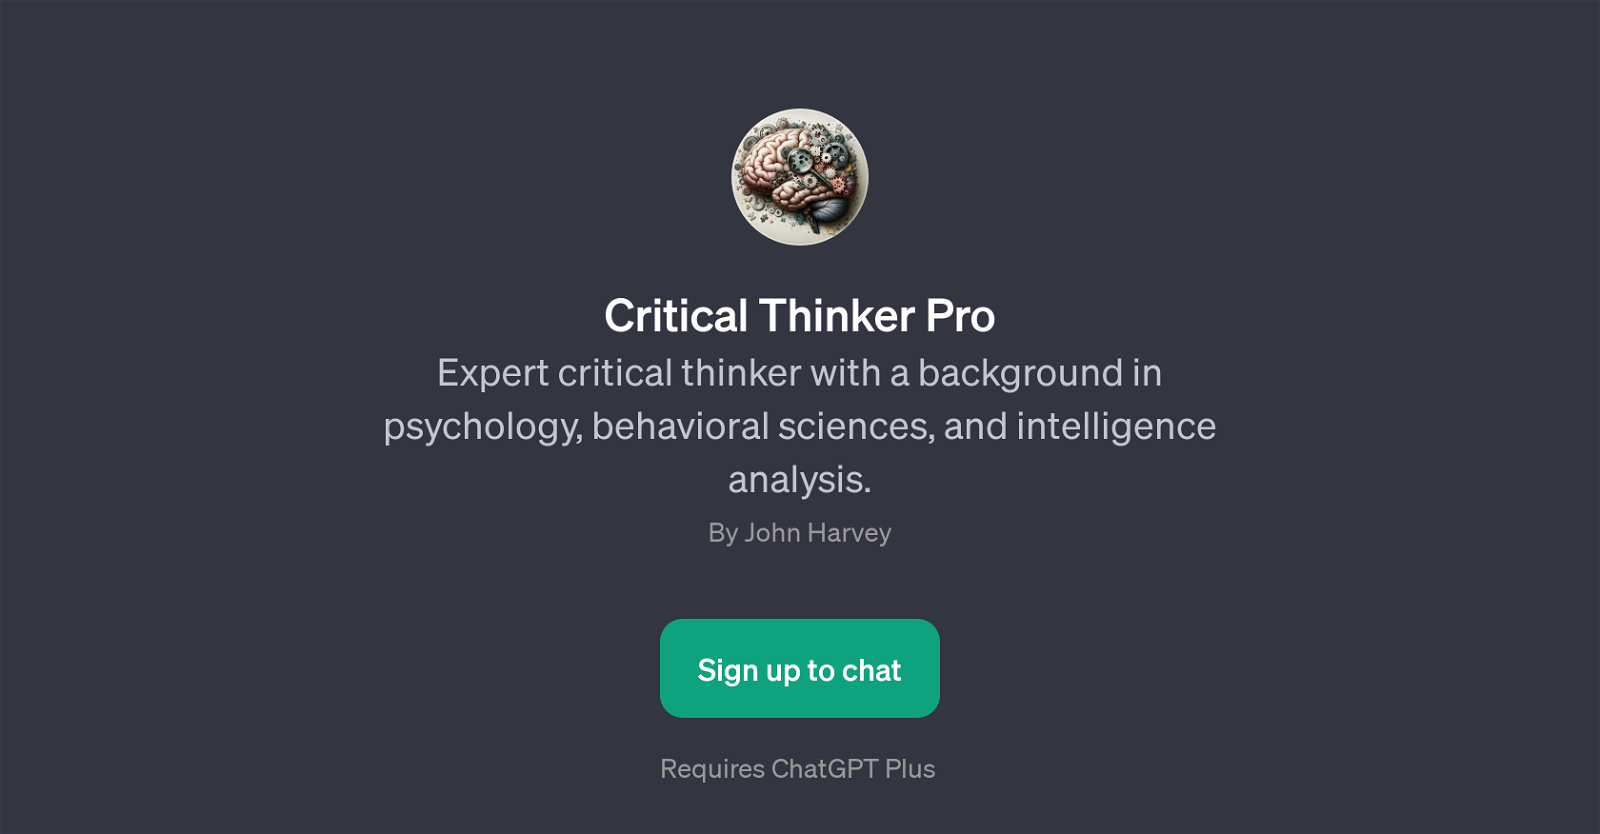 Critical Thinker Pro website